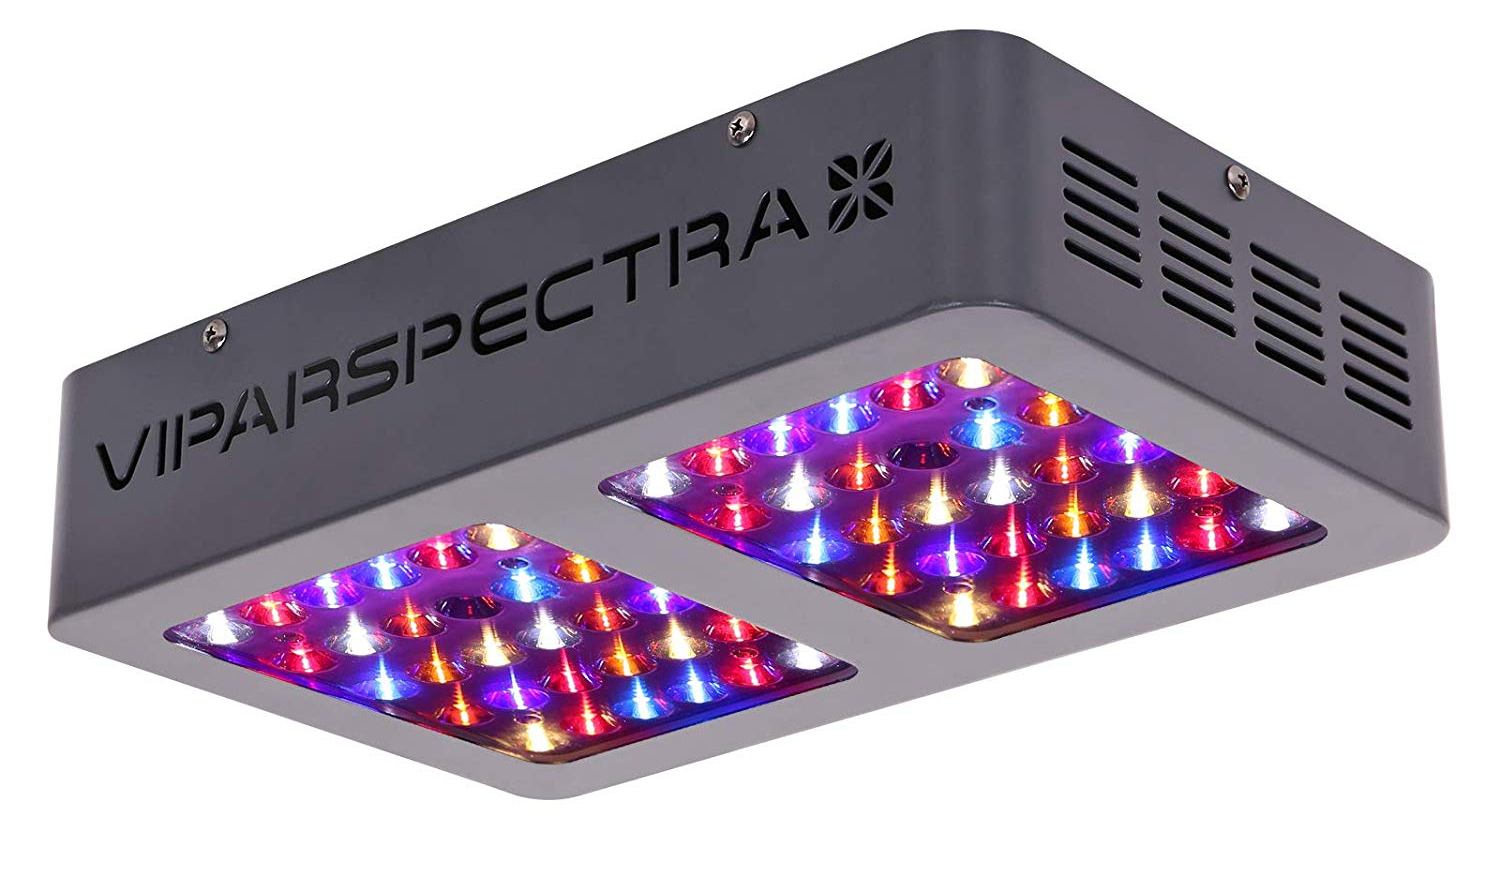 Viparspectra Reflector Series 300 watts LED Grow Light